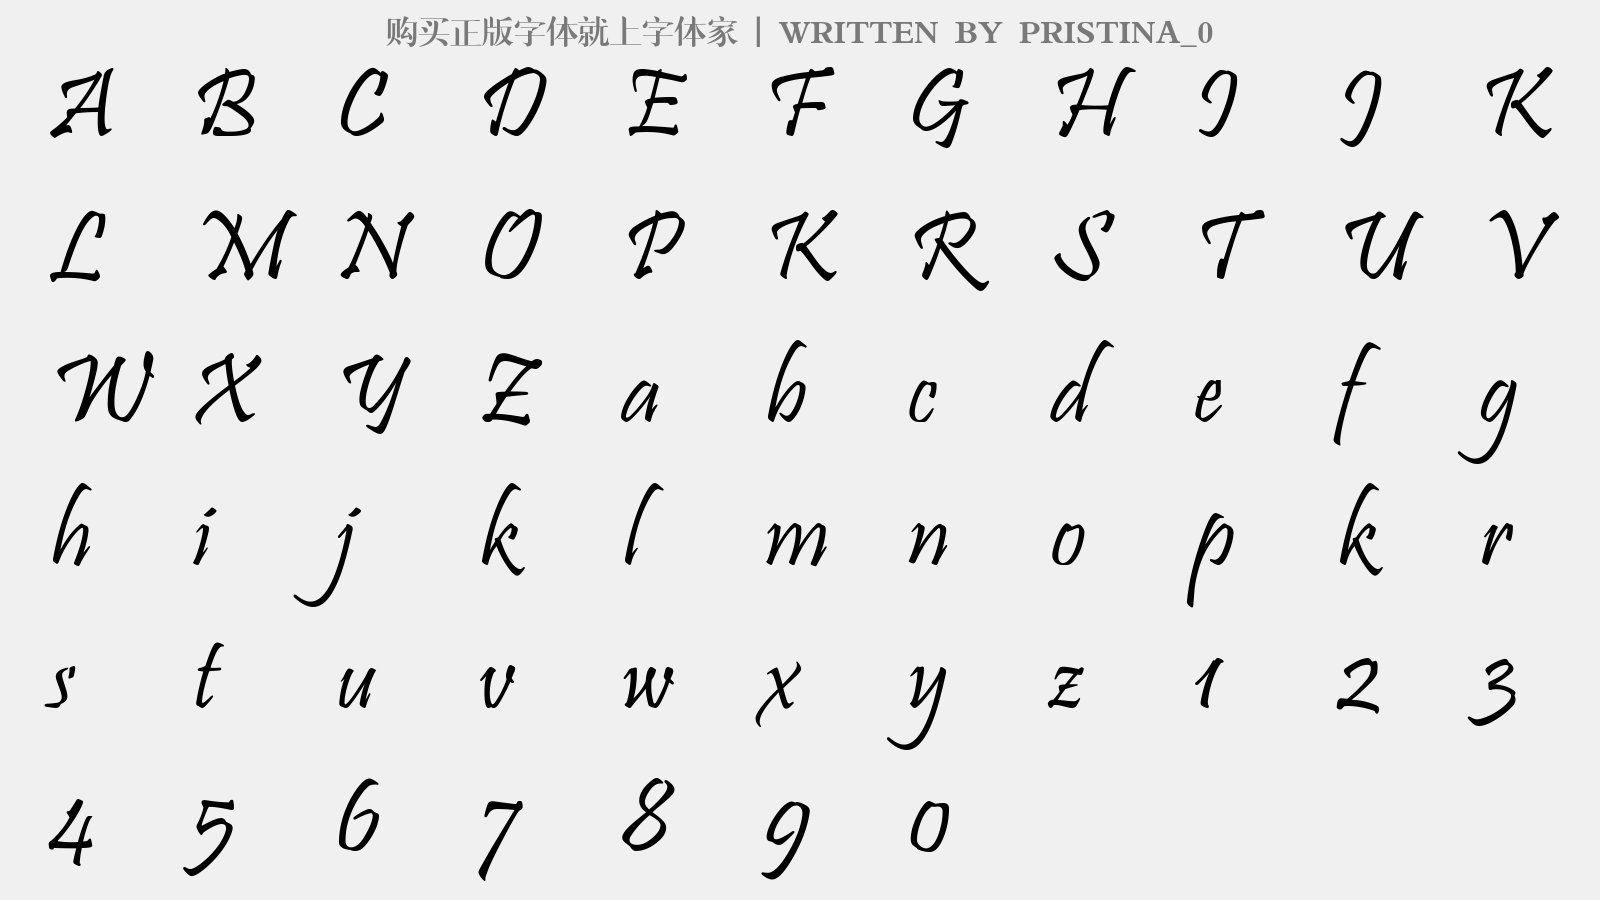 pristina_0 - 大写字母/小写字母/数字